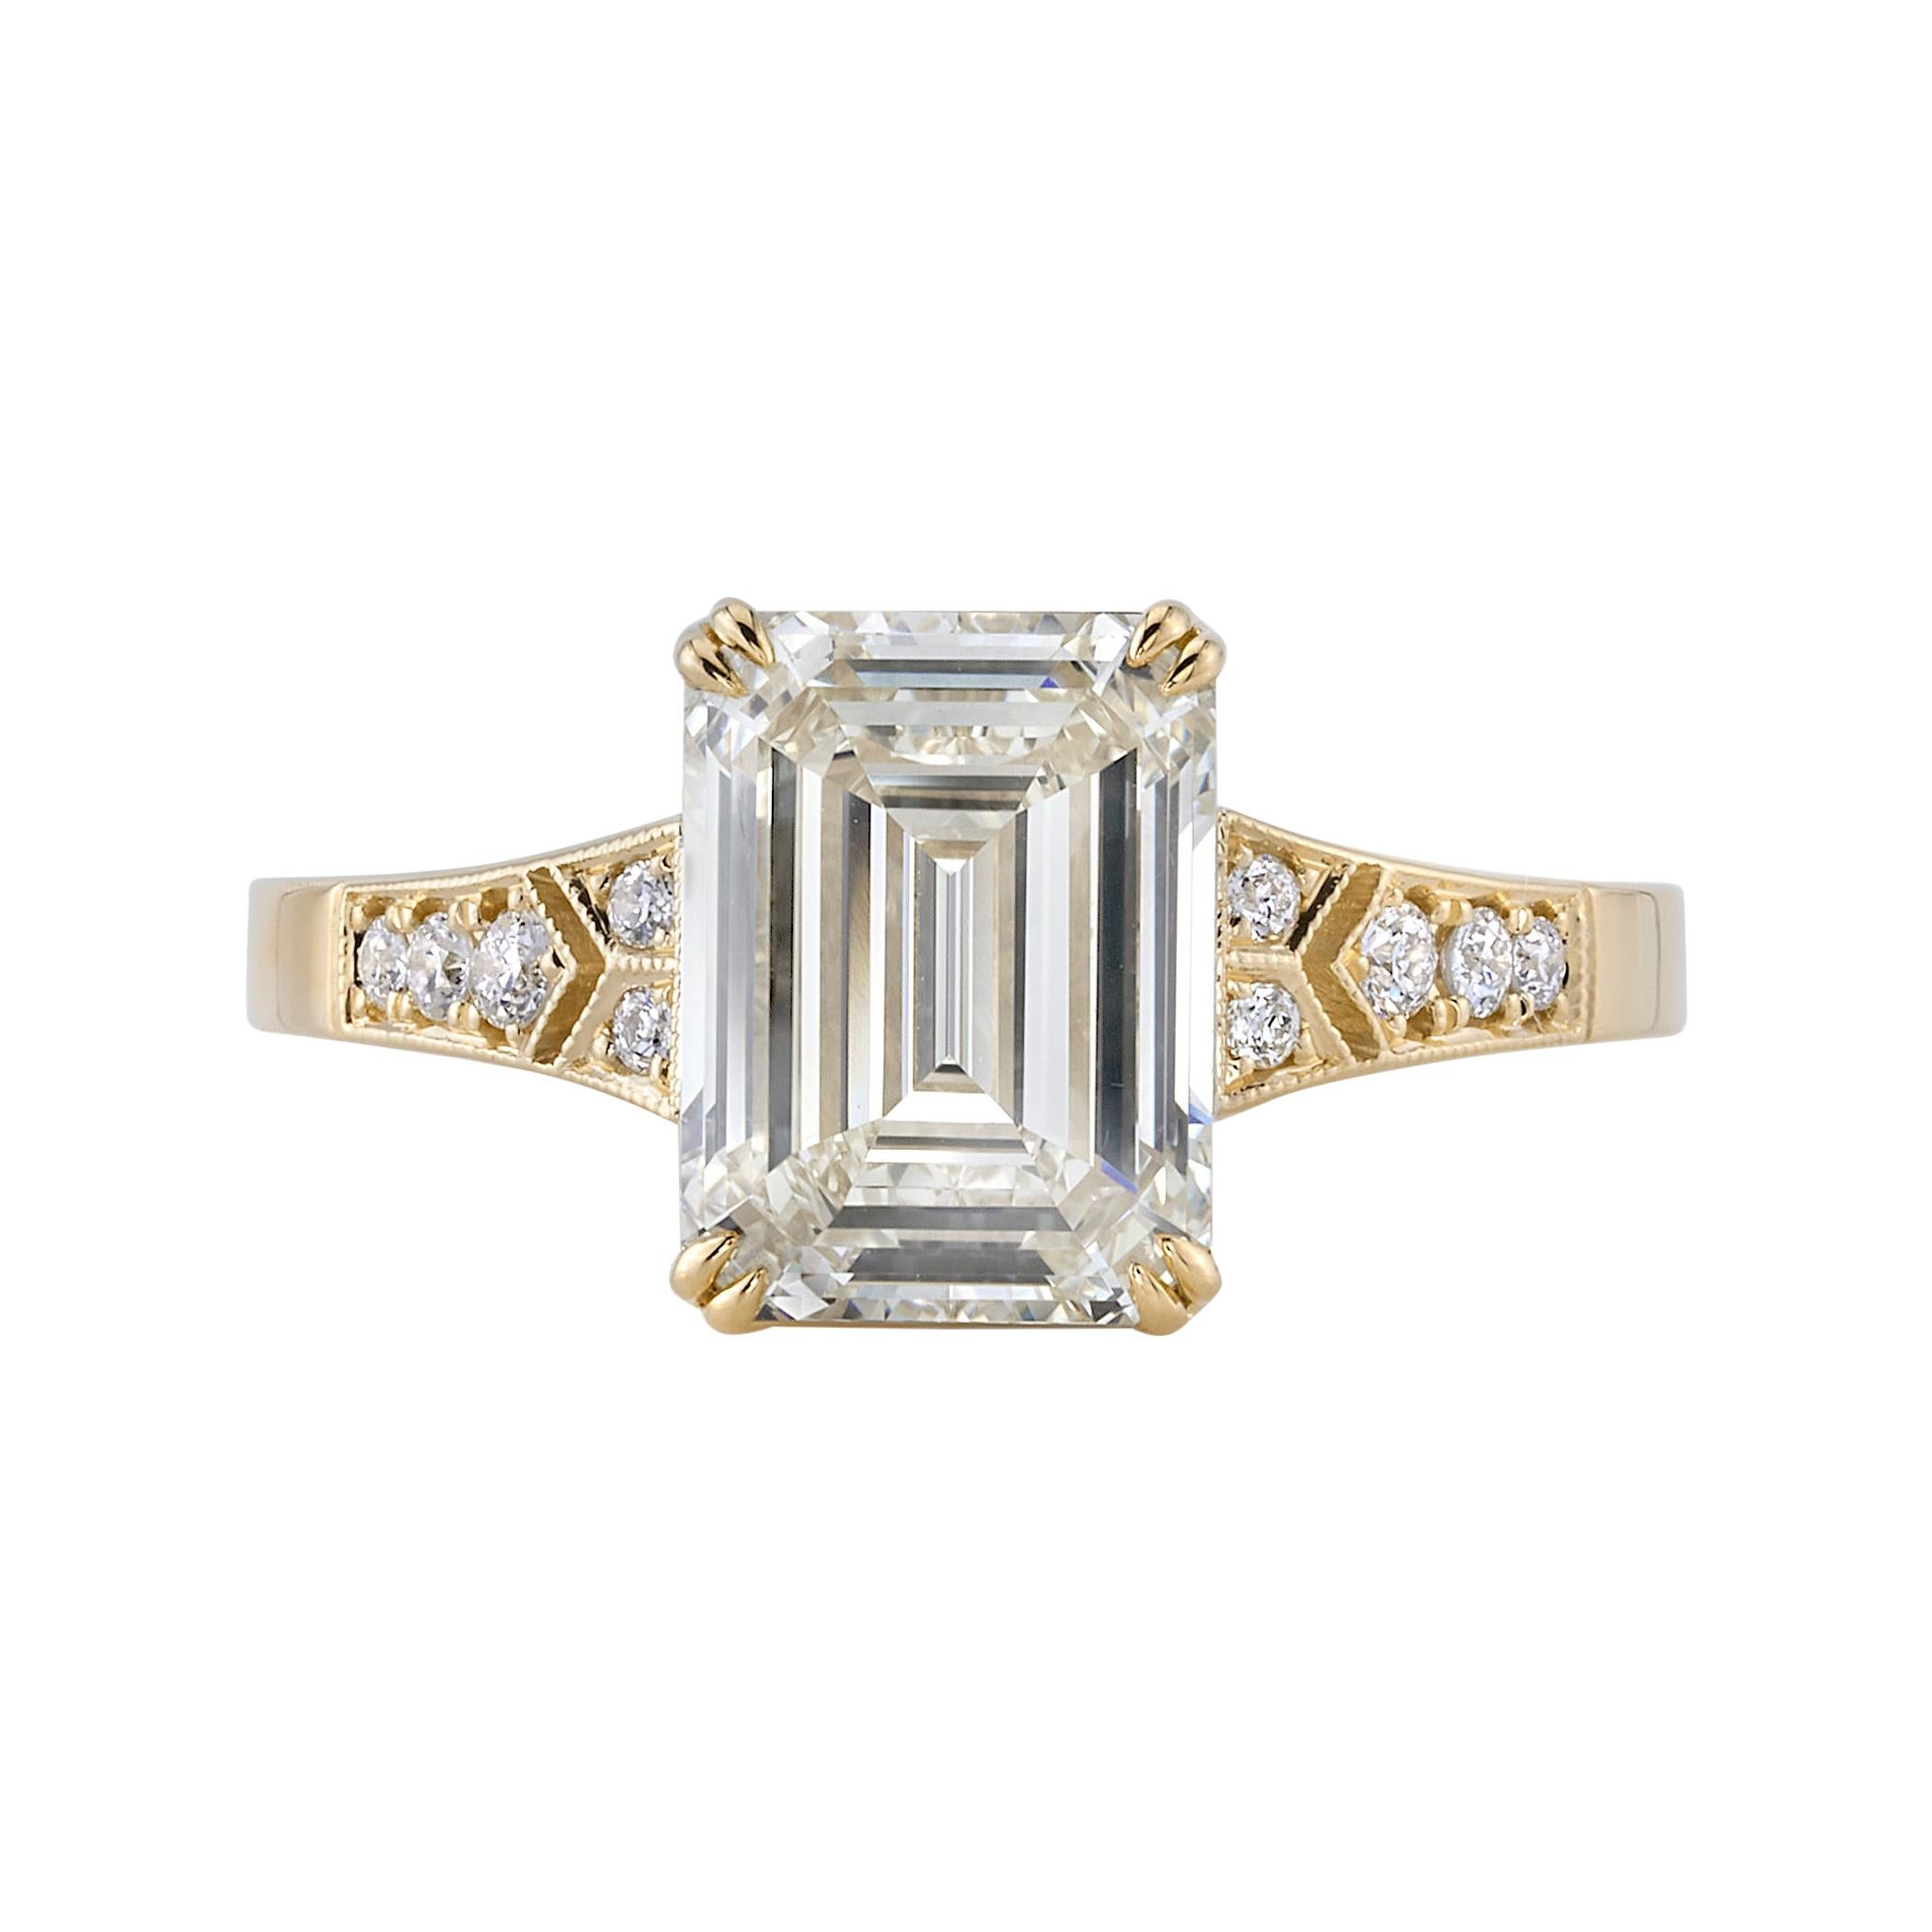 Handcrafted Lorraine Emerald Cut Diamond Ring by Single Stone